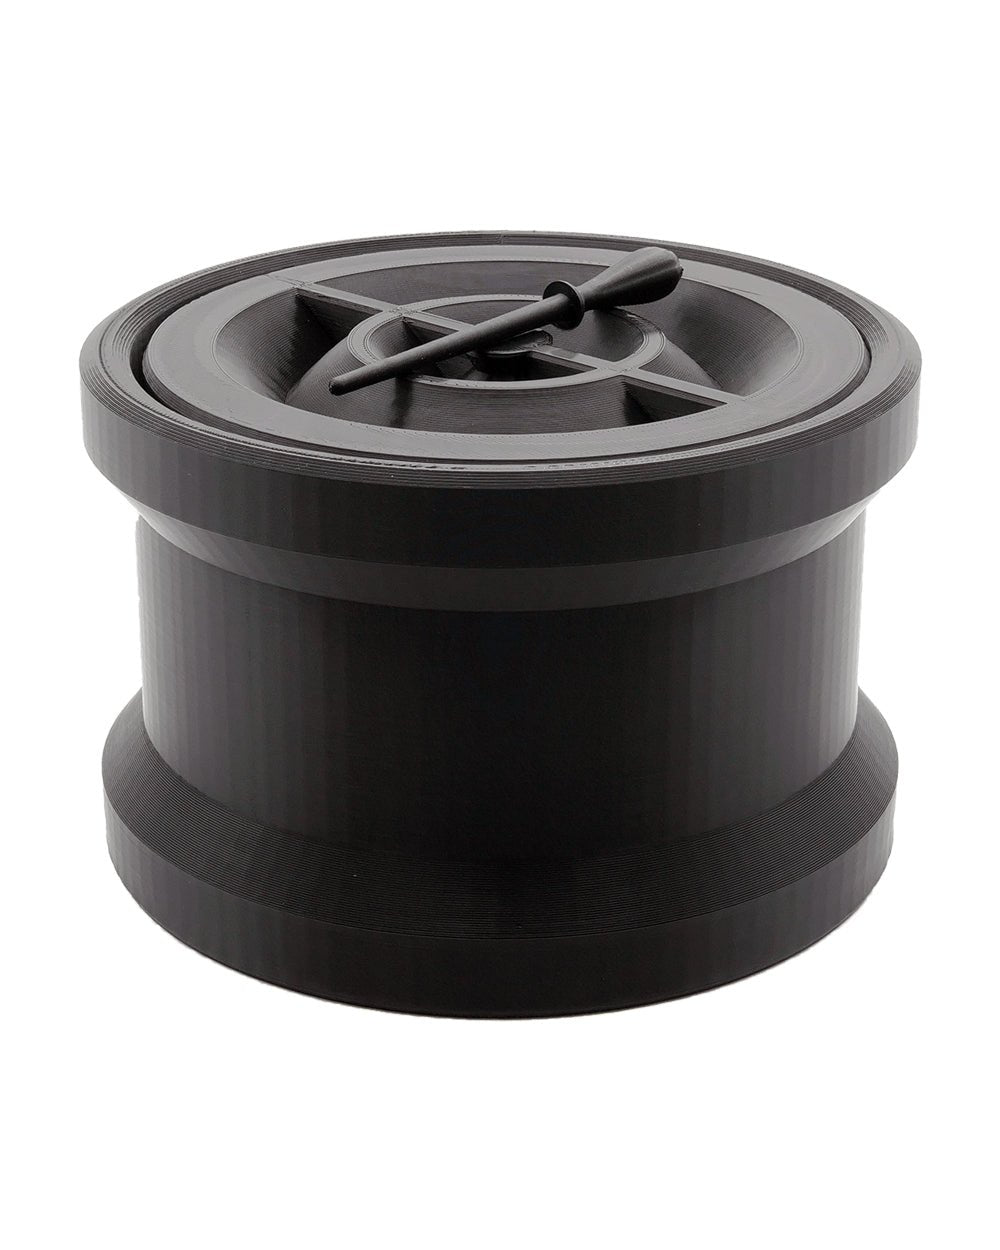 HUMBOLDT | Black Pre-Rolled Cones Filling Machine Starter Kit 98mm | Fill 121 Cones Per Run - 2